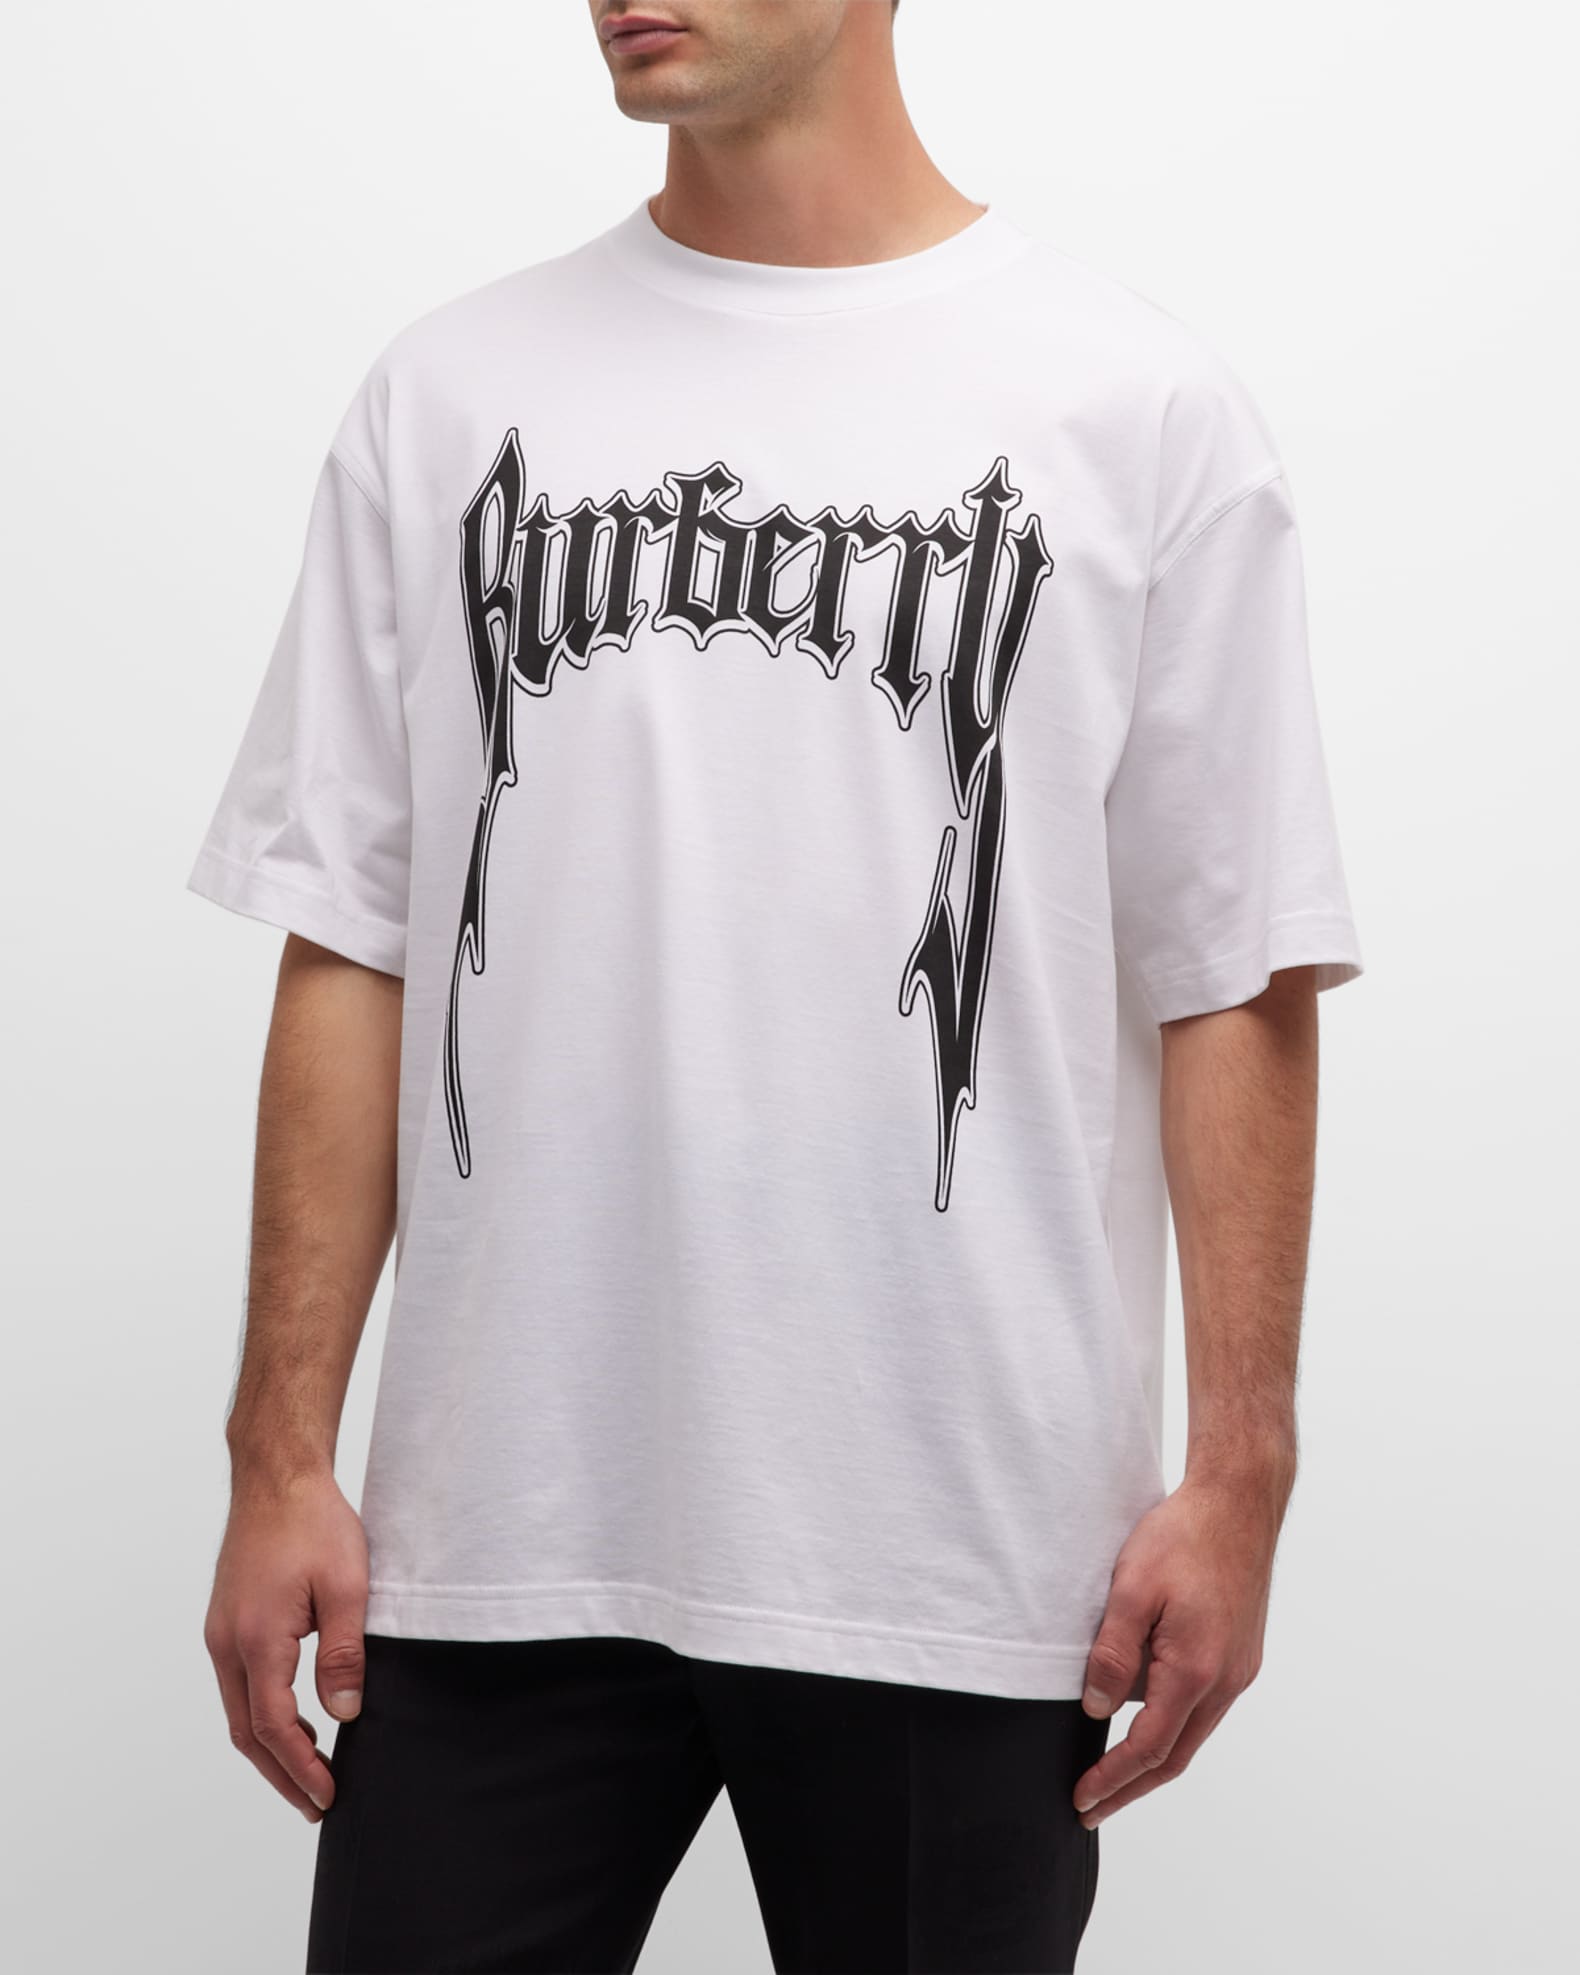 Burberry Logo T Shirt